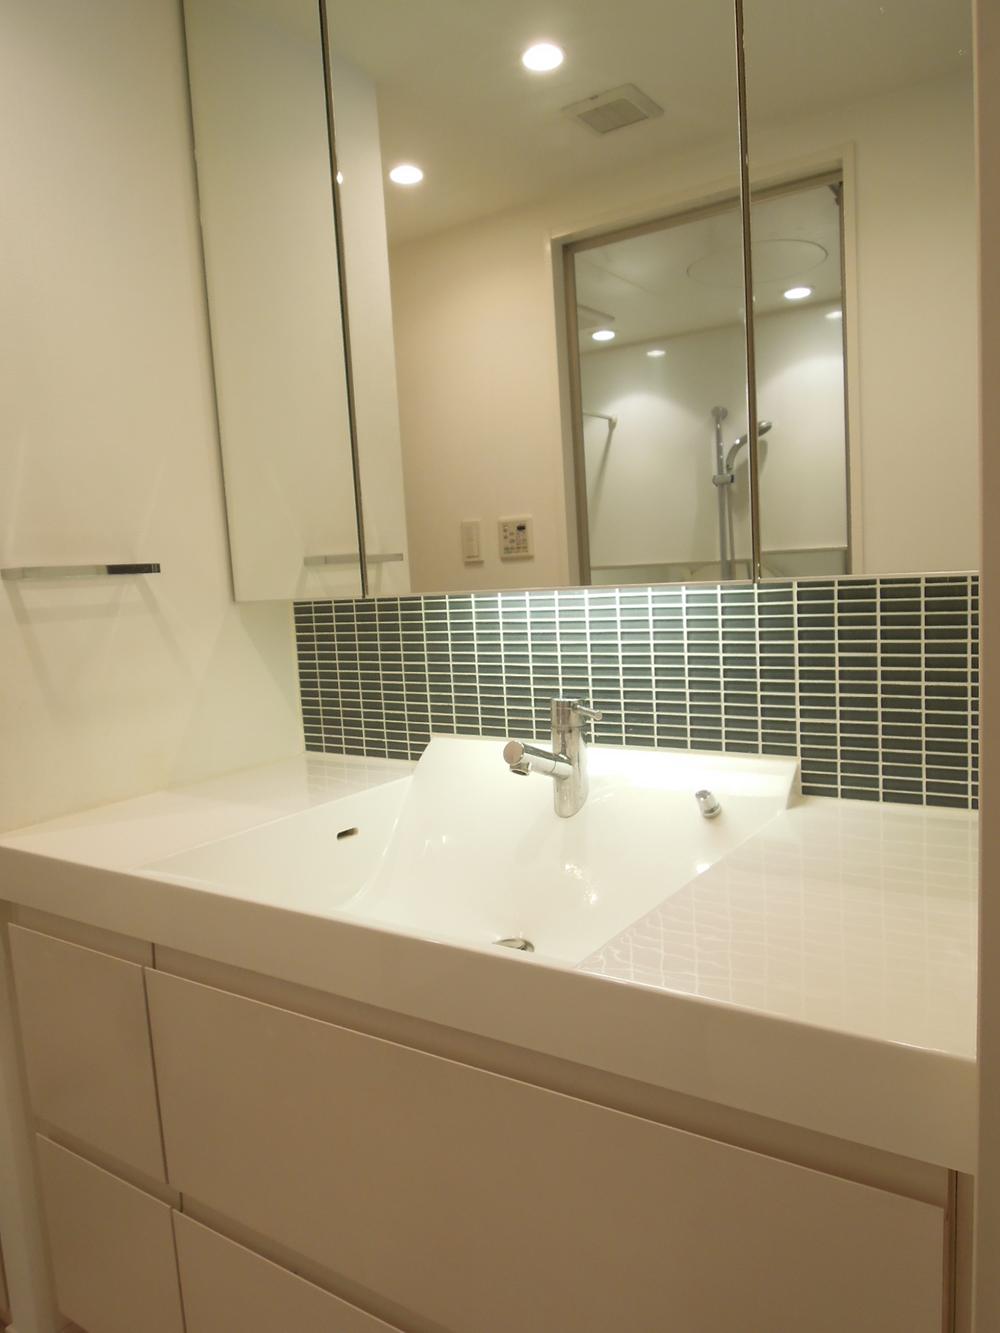 Wash basin, toilet. Three-sided mirror with vanity (January 2014) Shooting